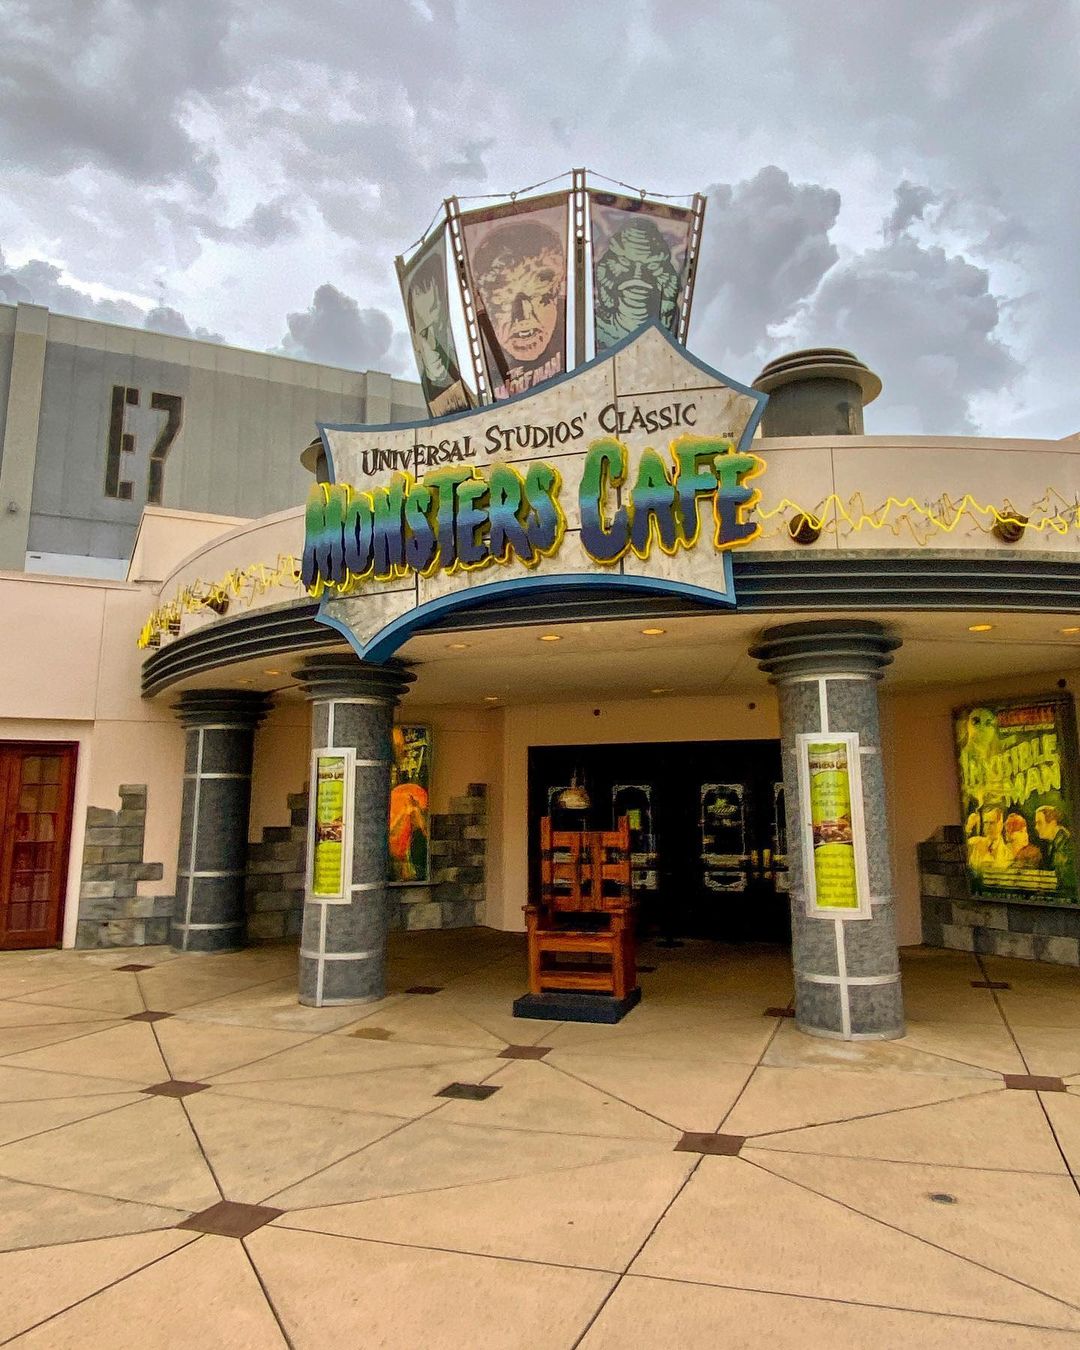 Classic Monsters Cafe - Universal Studios Restaurant